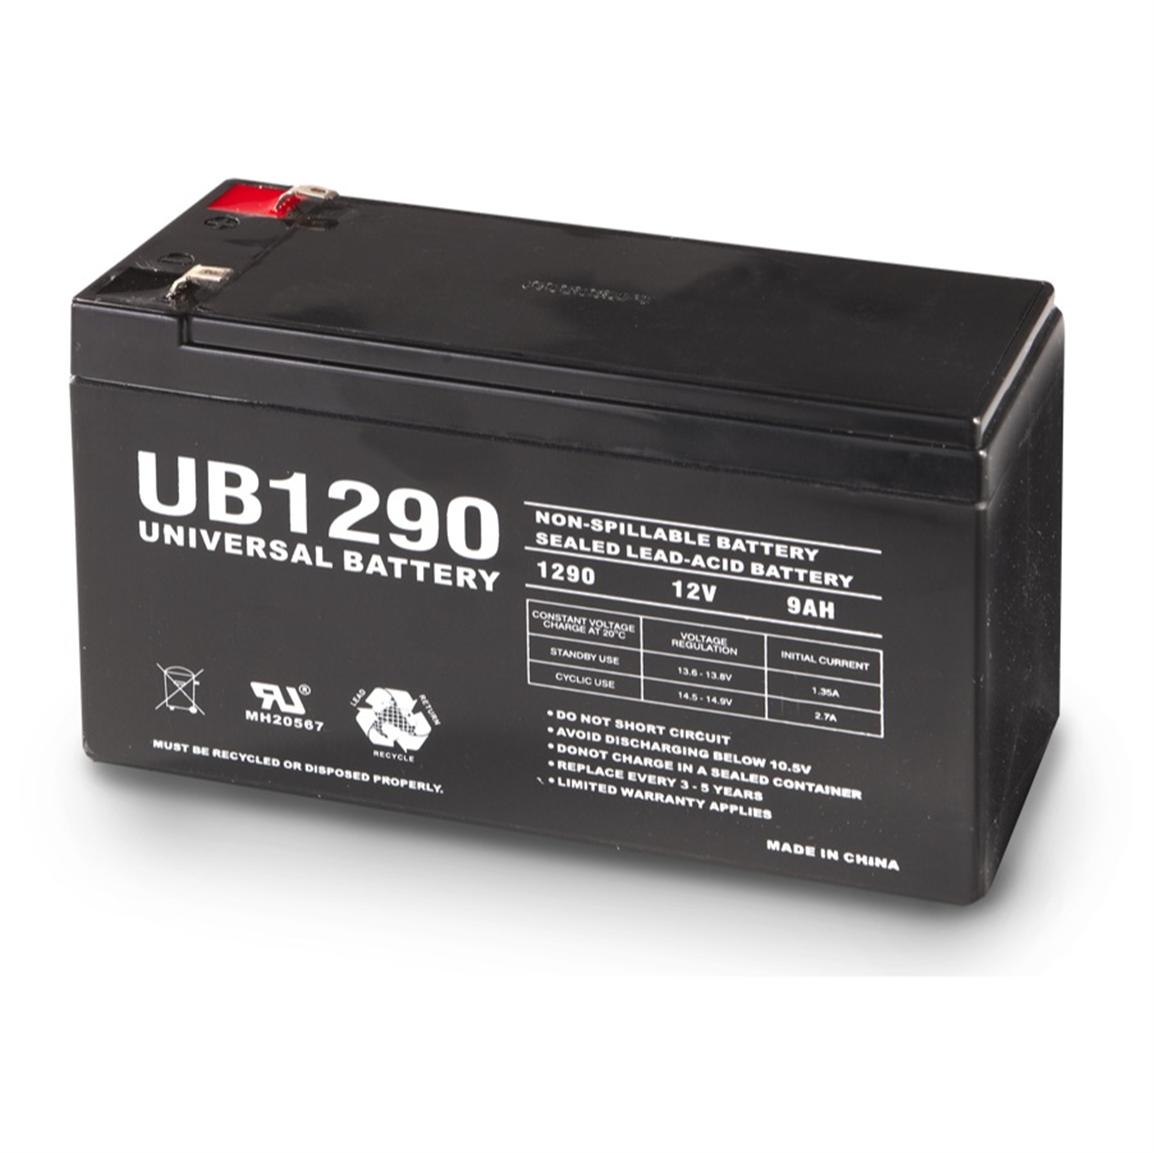 12V 9AH Universal Battery - 203057, Ice Fishing Electronics at